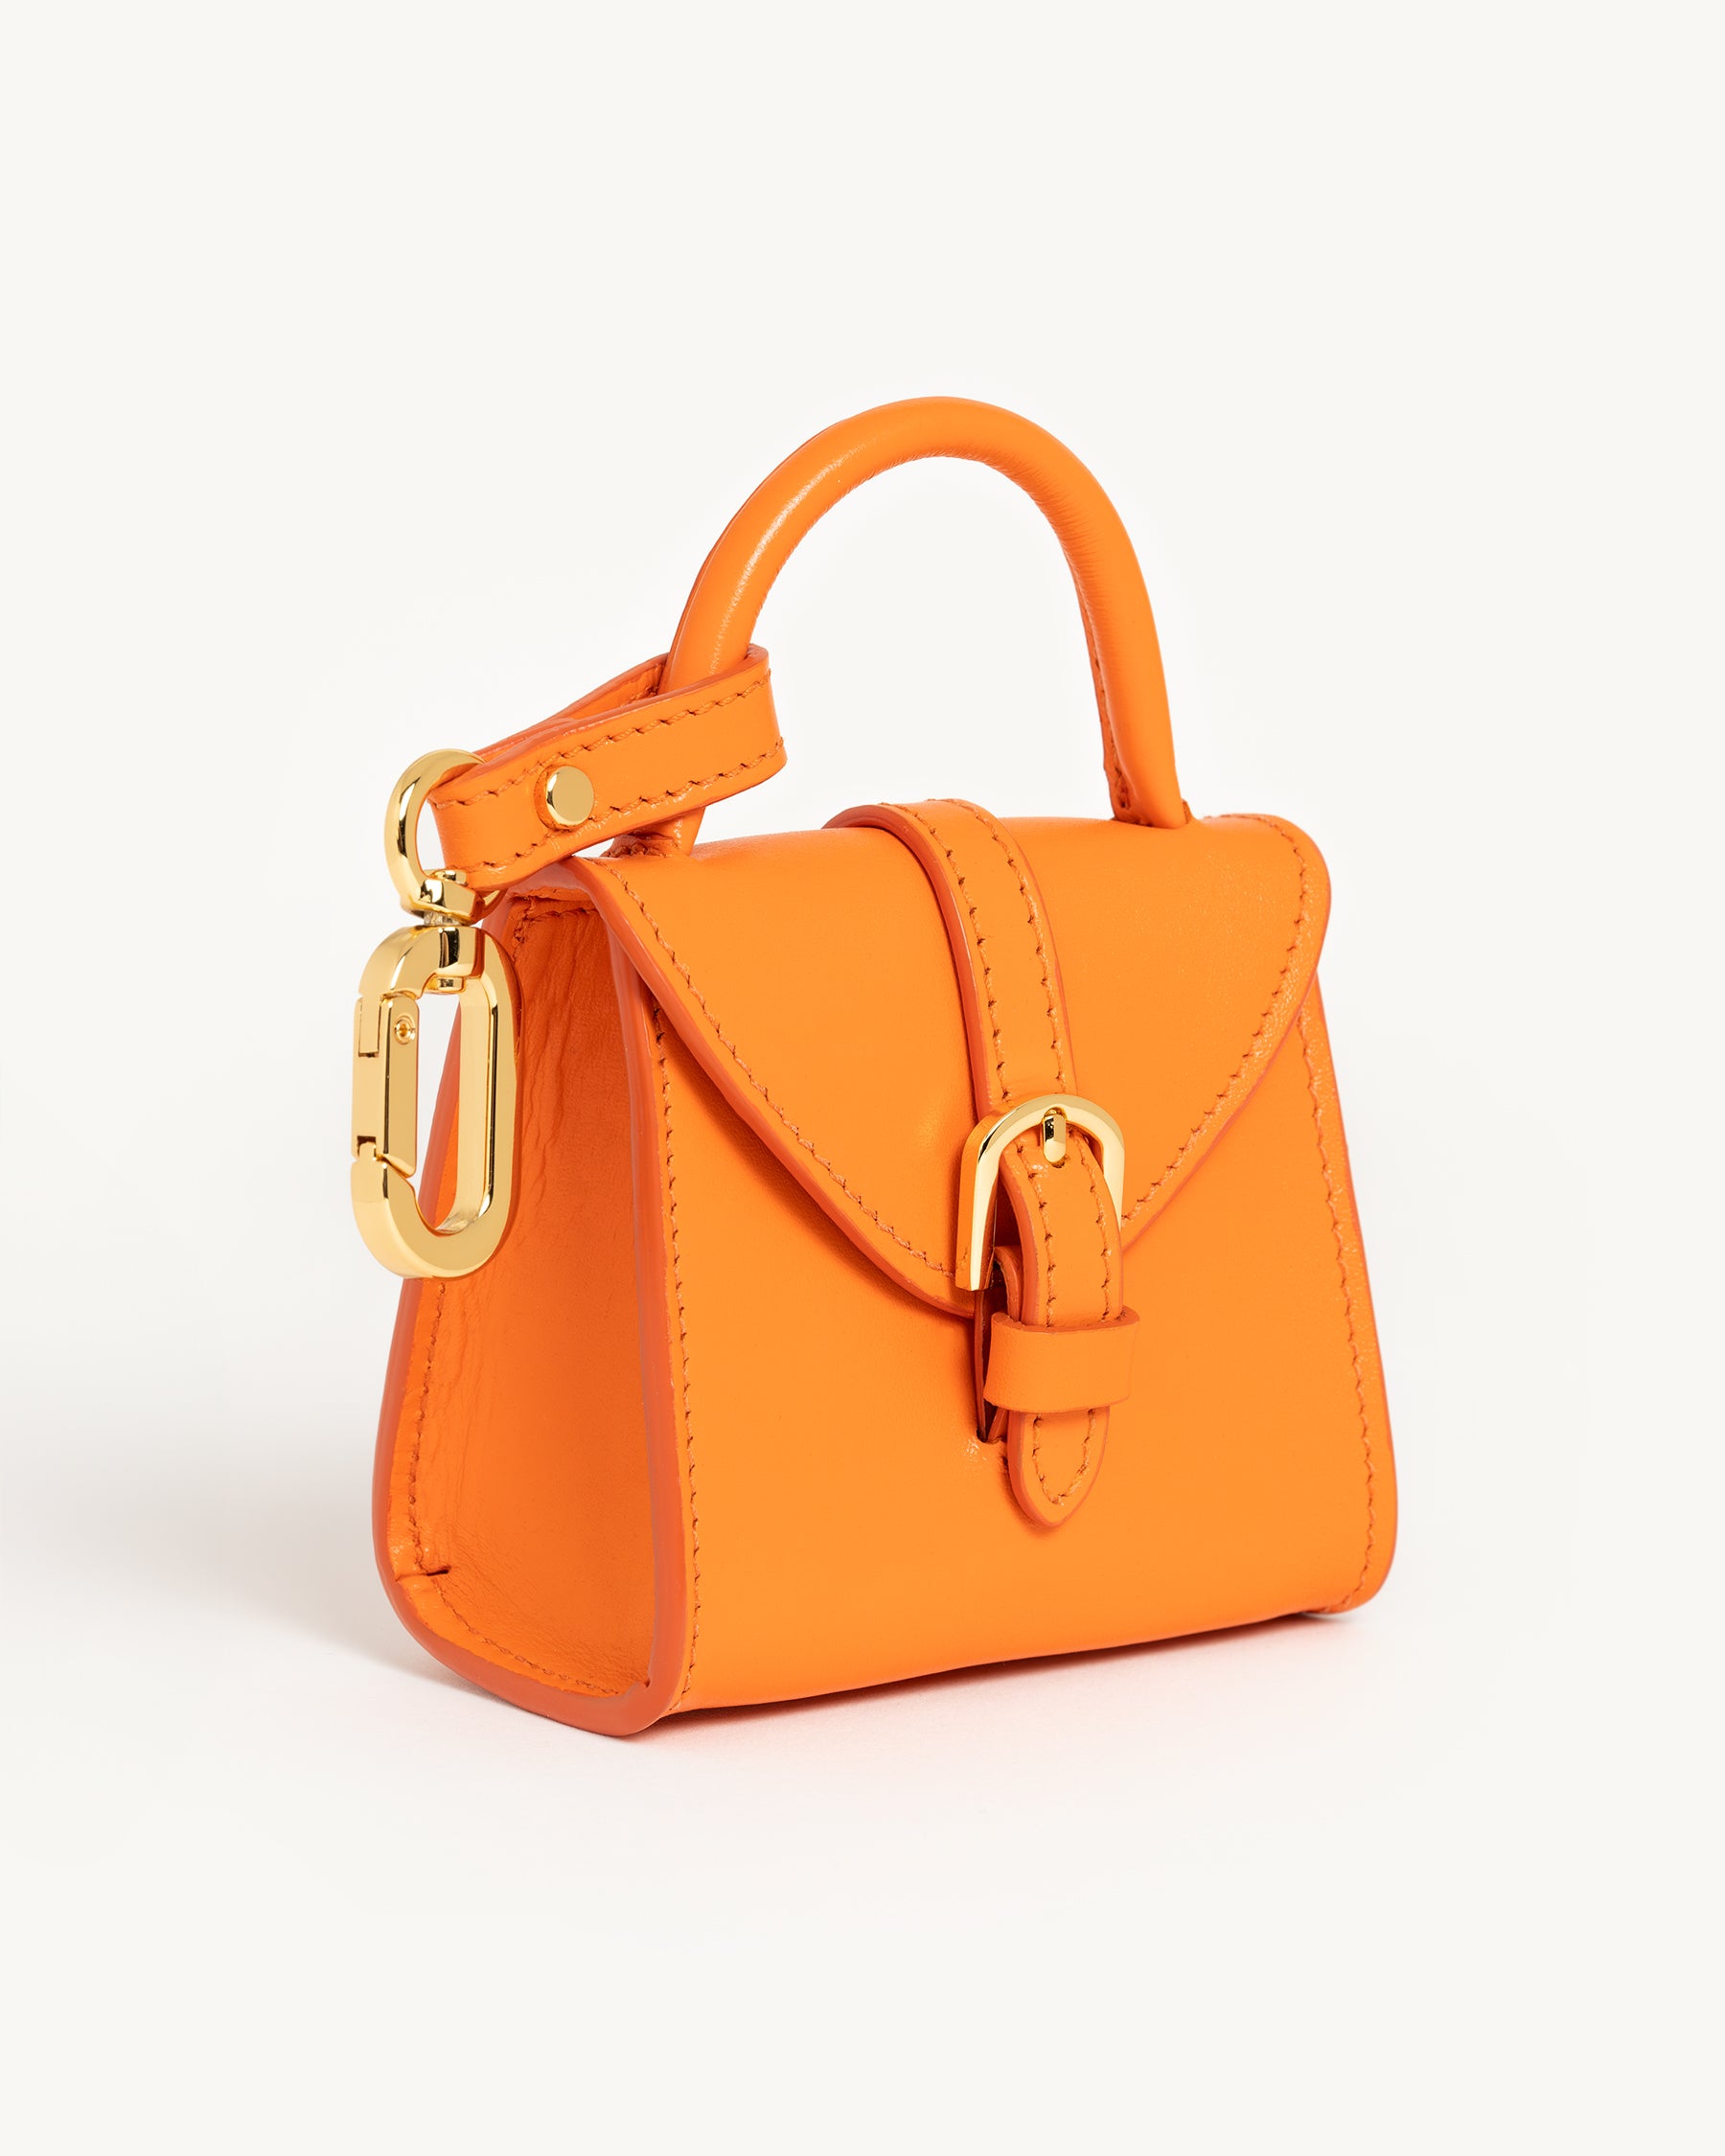 Dear Nora Tangerine poop bag holder - orange leather and 24k plated hardware - three quarter angle shot